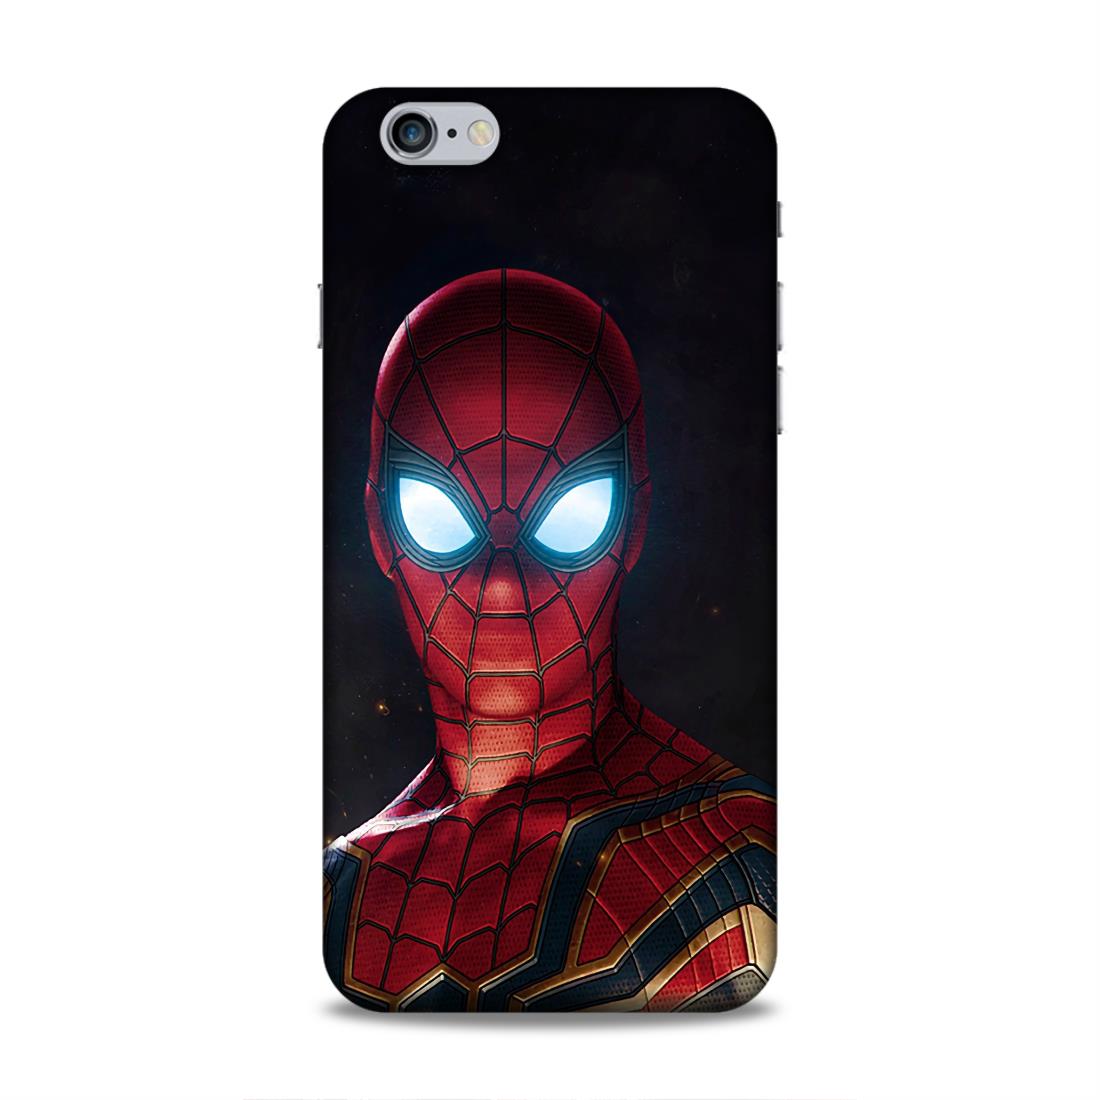 Spiderman Hard Back Case For Apple iPhone 6 Plus / 6s Plus